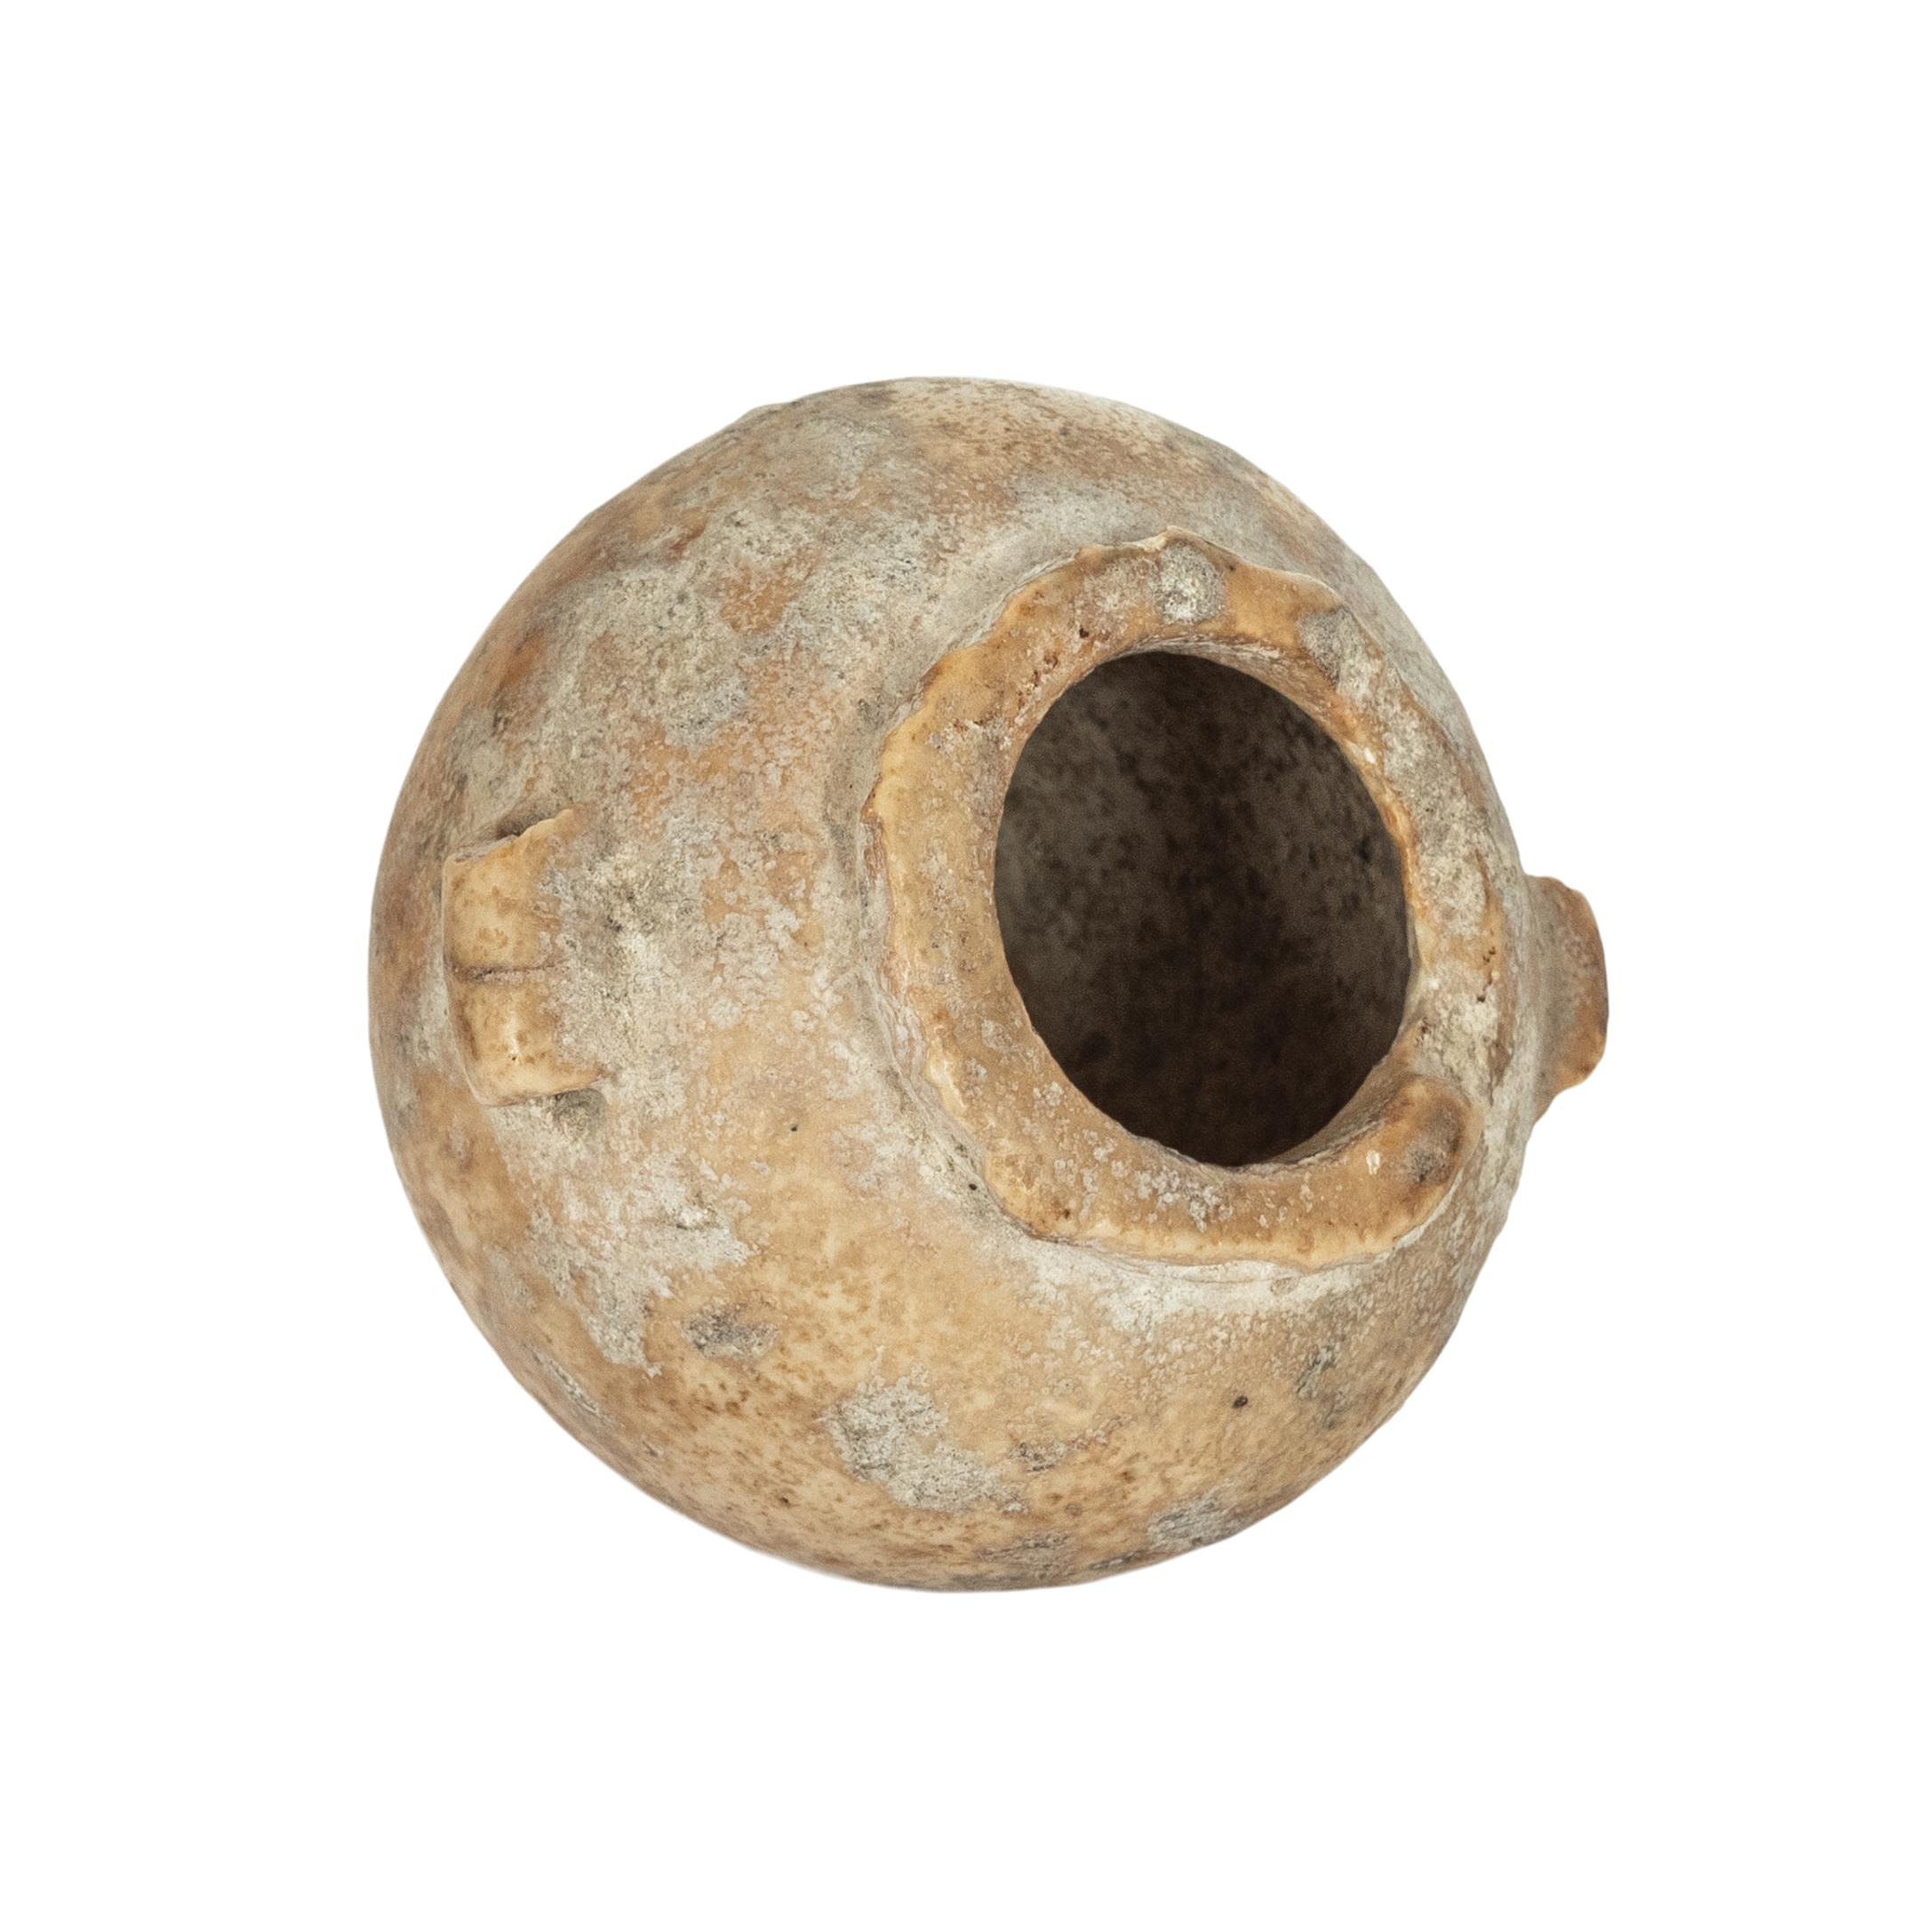 Ancienne Égypte Ancien Empire Miniature A Stone Vessel Jar 2600-2800 BCE 3